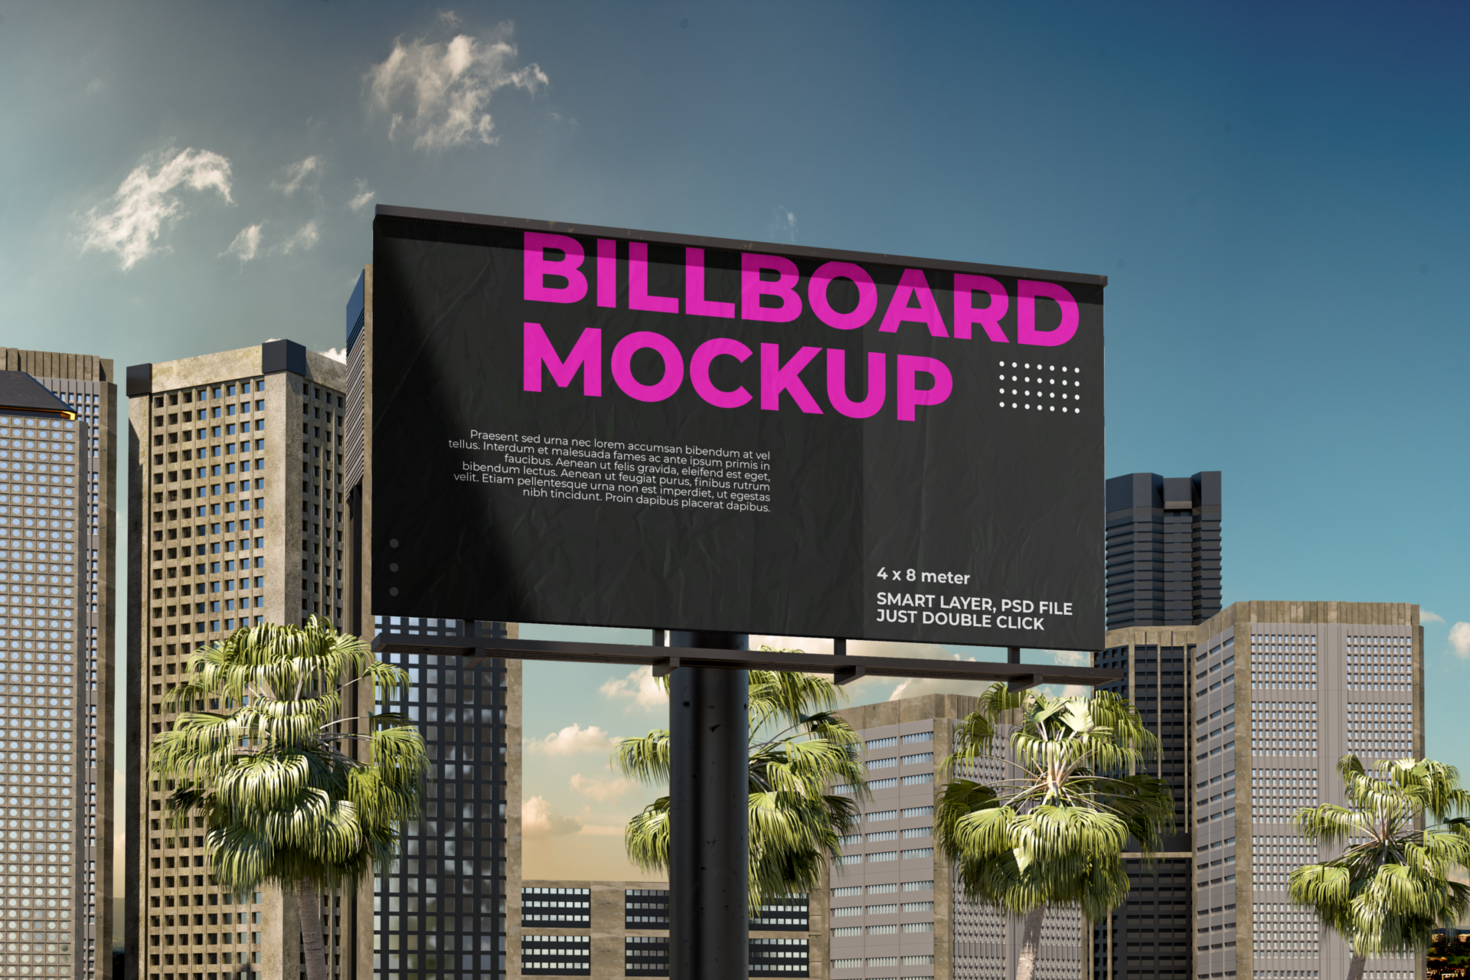 Roadside Billboard Mockup psd